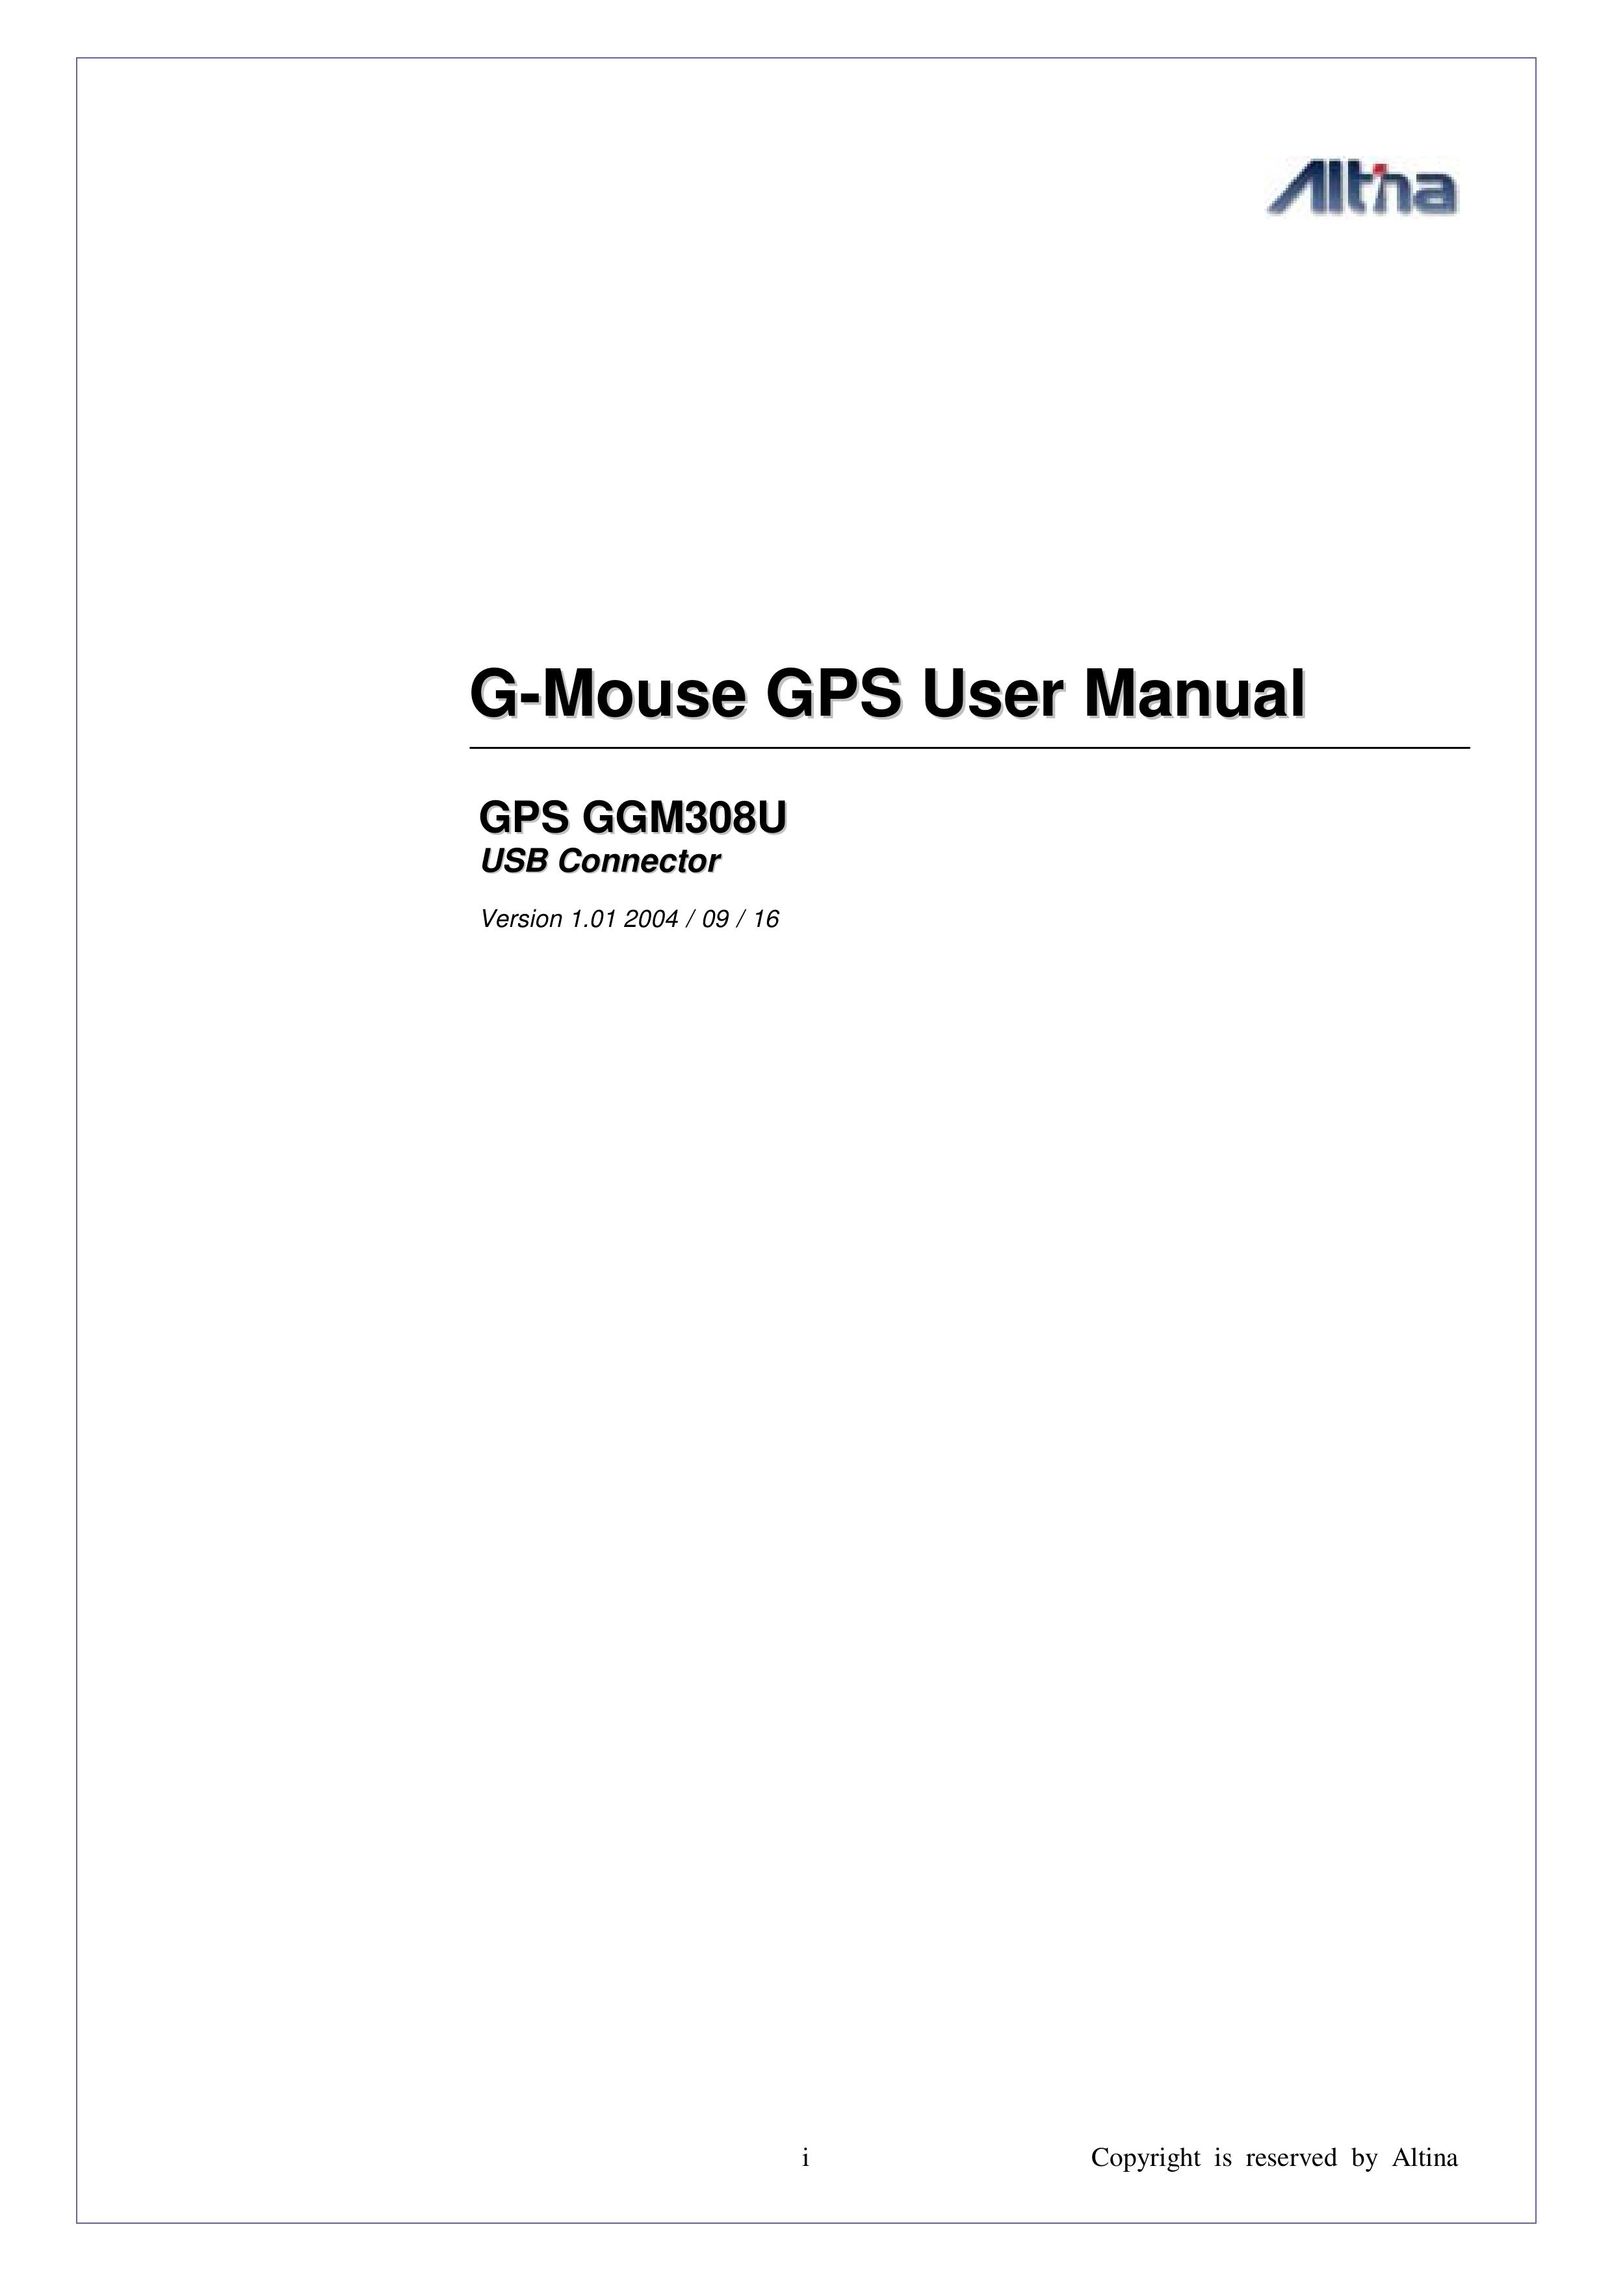 Altina GGM308U Network Card User Manual